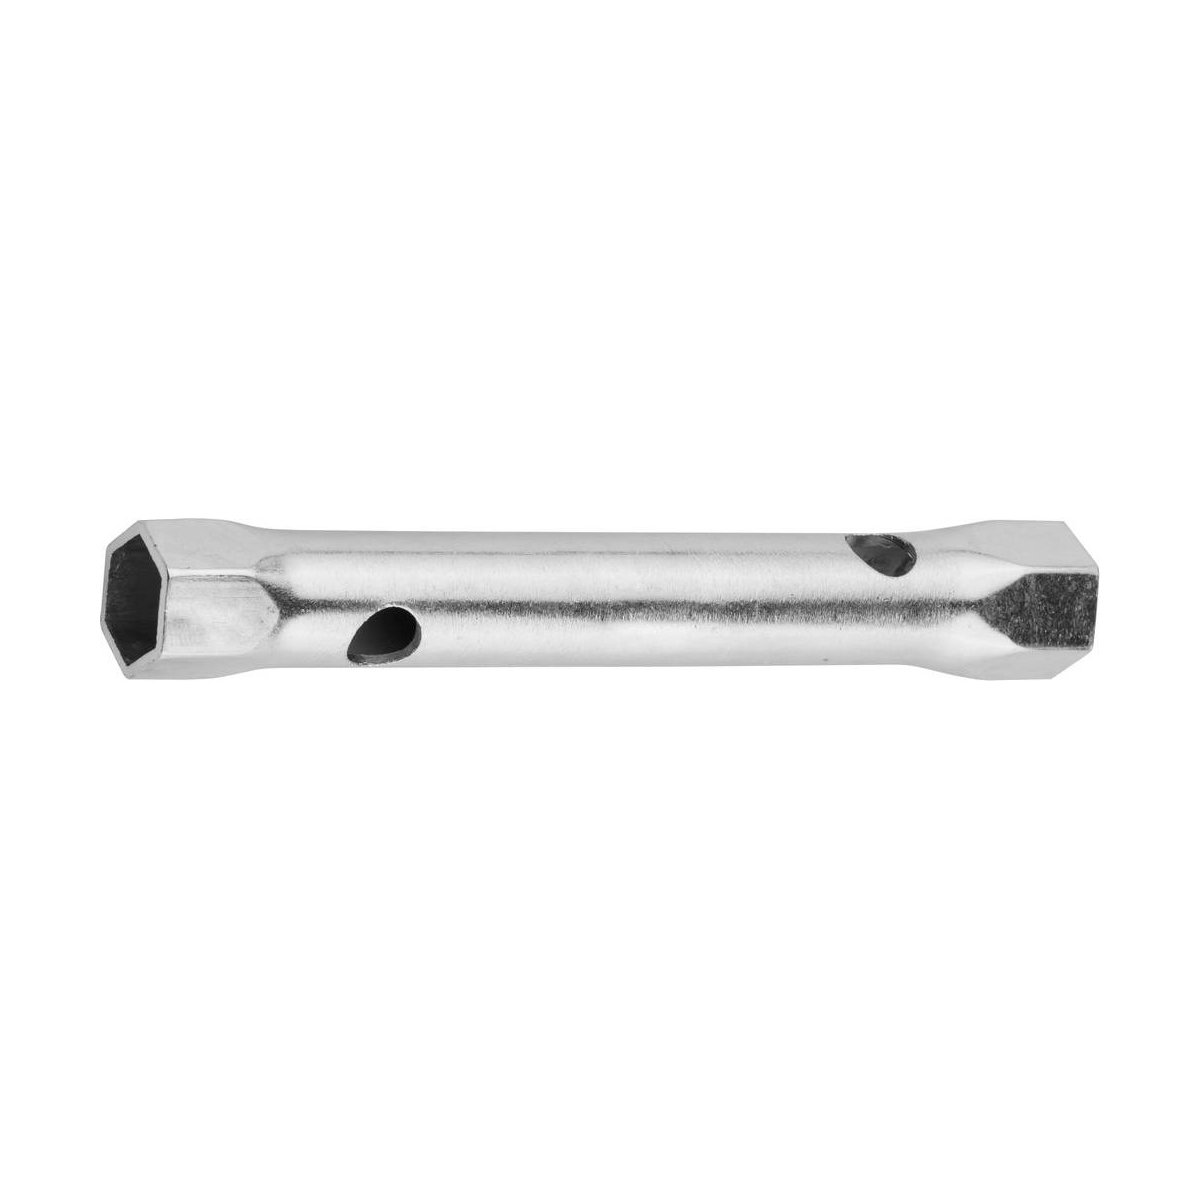 ЗУБР 17 х 19 мм, хромированный, ключ торцовый трубчатый 27162-17-19